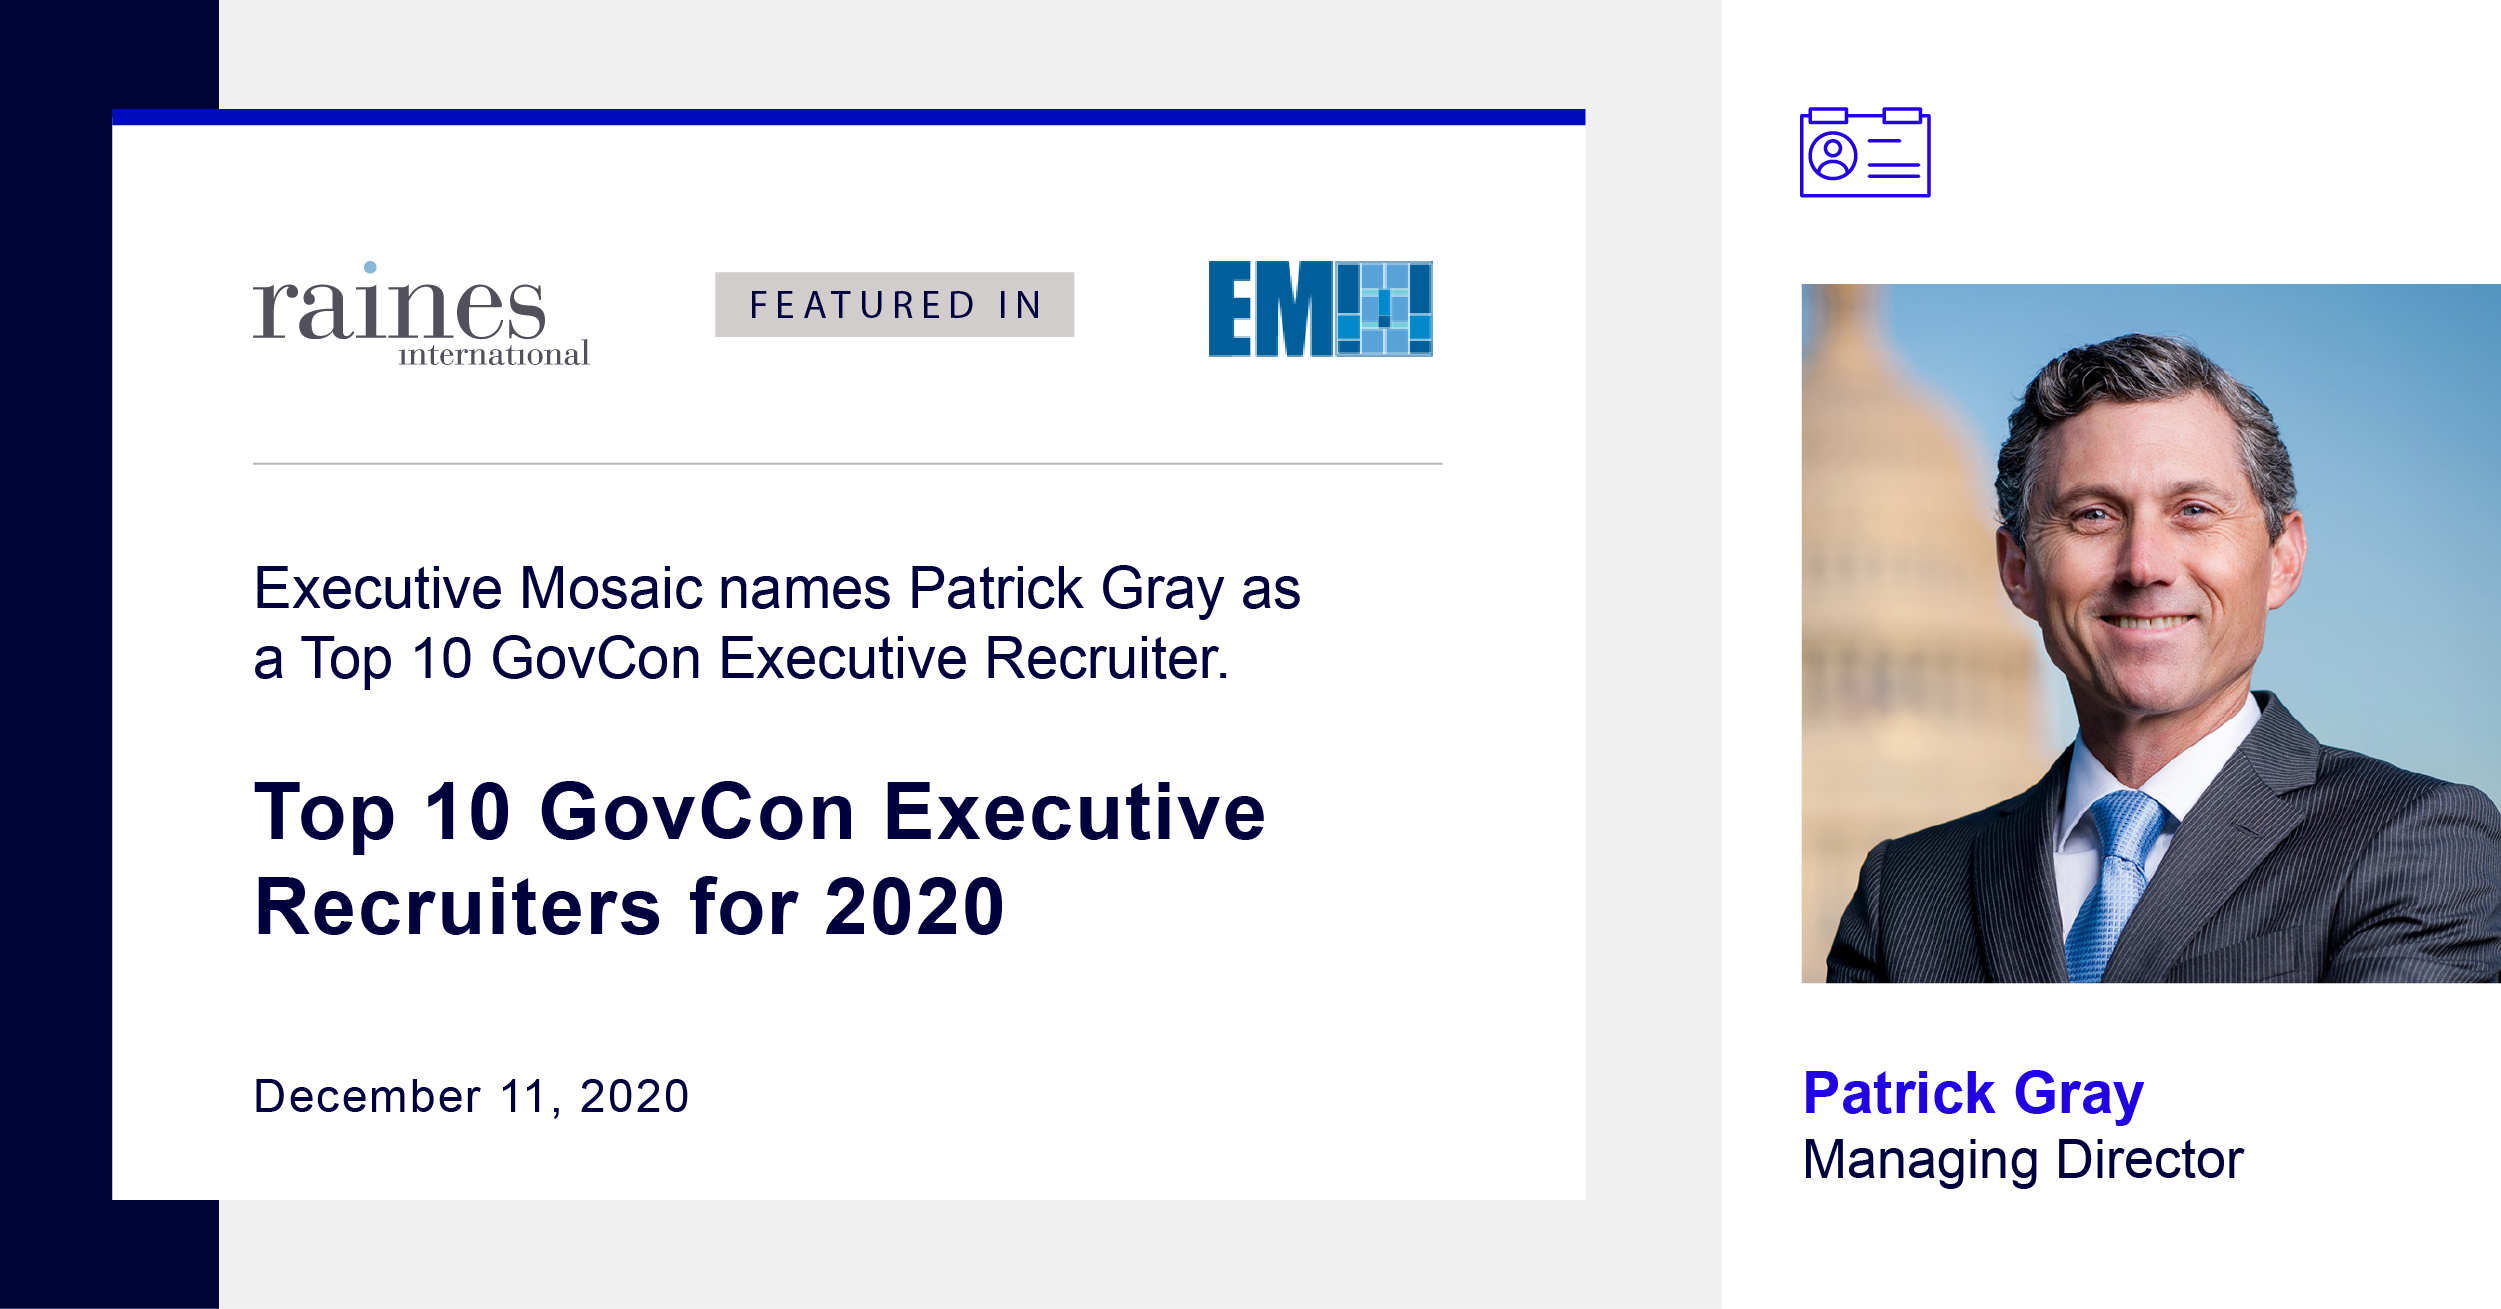 patrick gray executive govcon recruiters 2020 list, headshot image